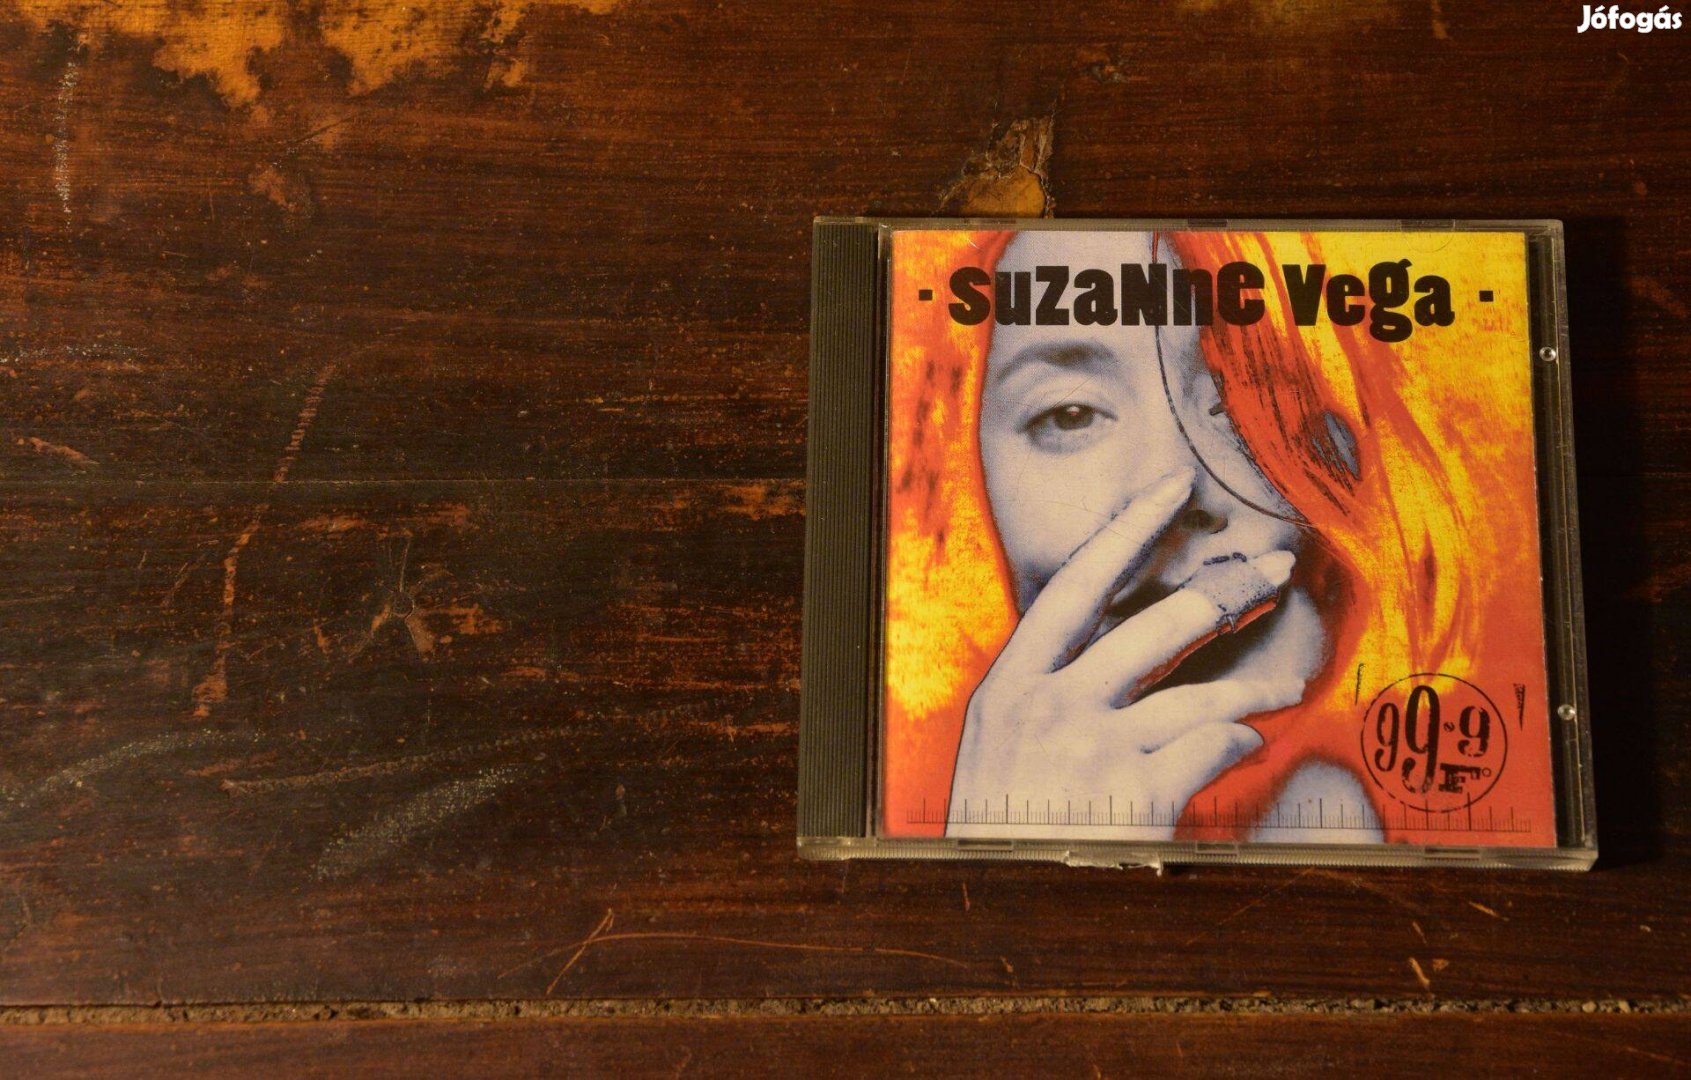 CD Suzanne Vega 99.9 F°